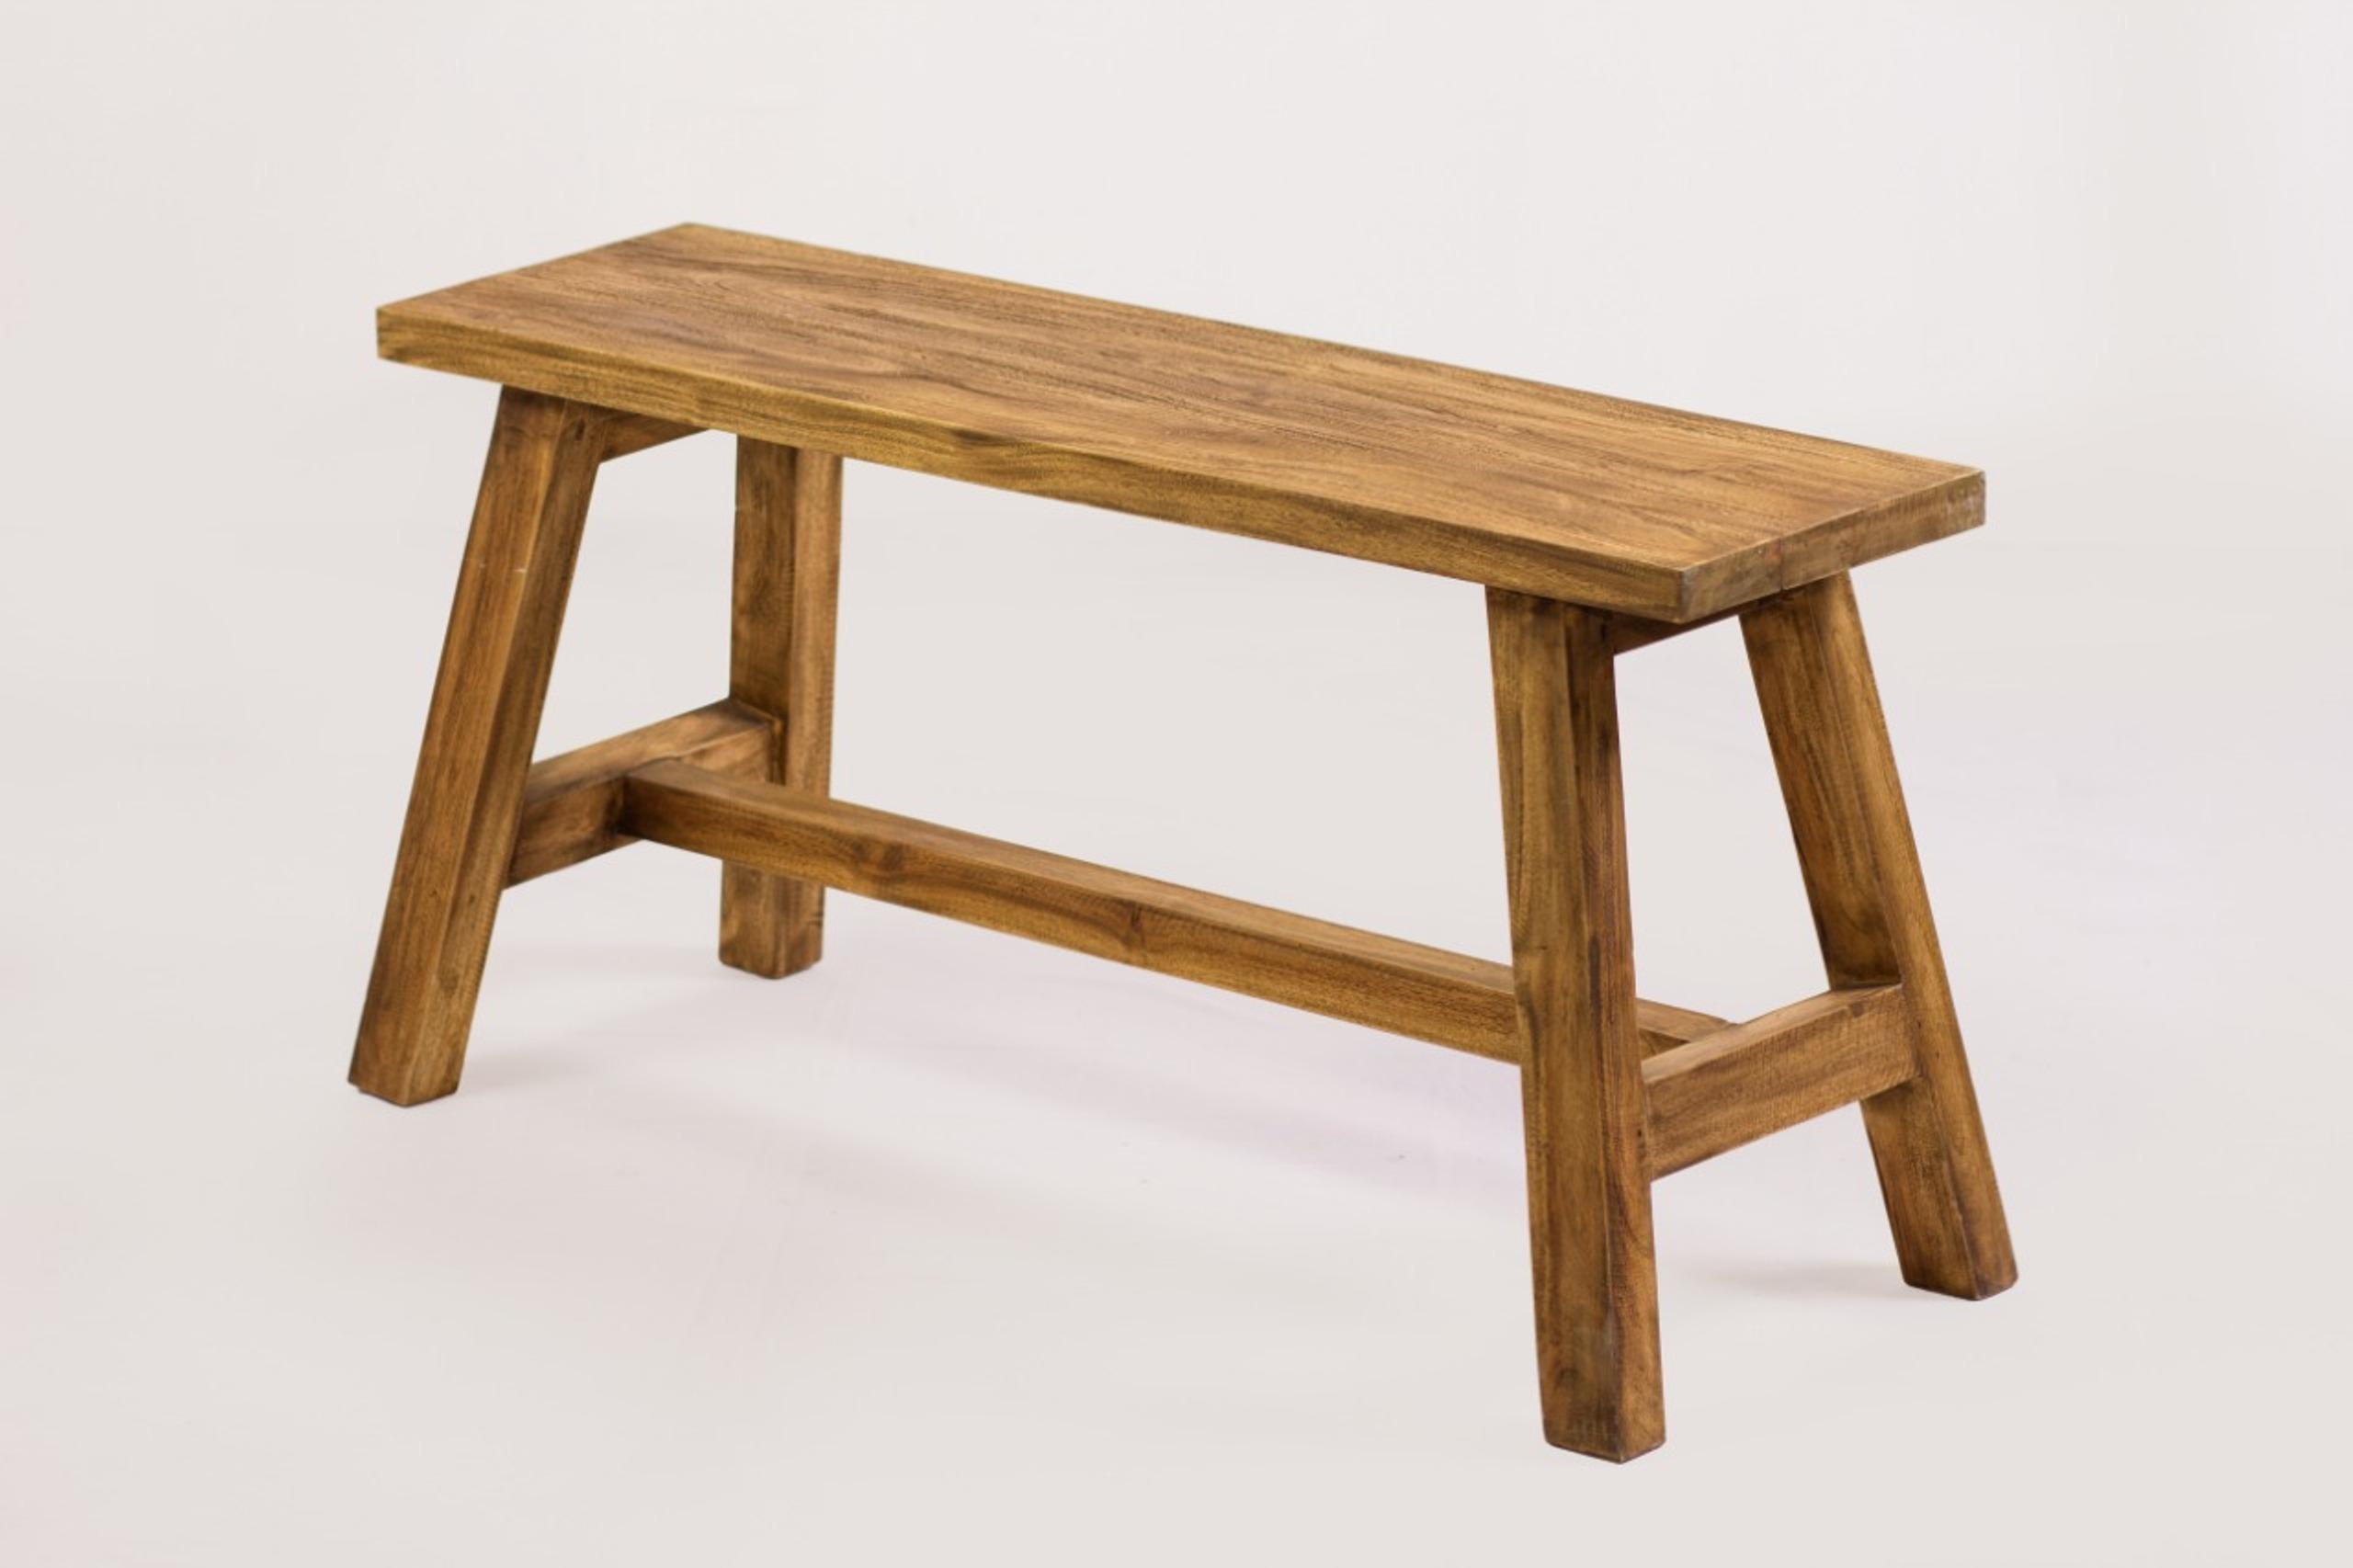 Sitzbank aus Mahagoni massiv - Naturfarben, MODERN, Holz (90/45/25cm) - Modern Living